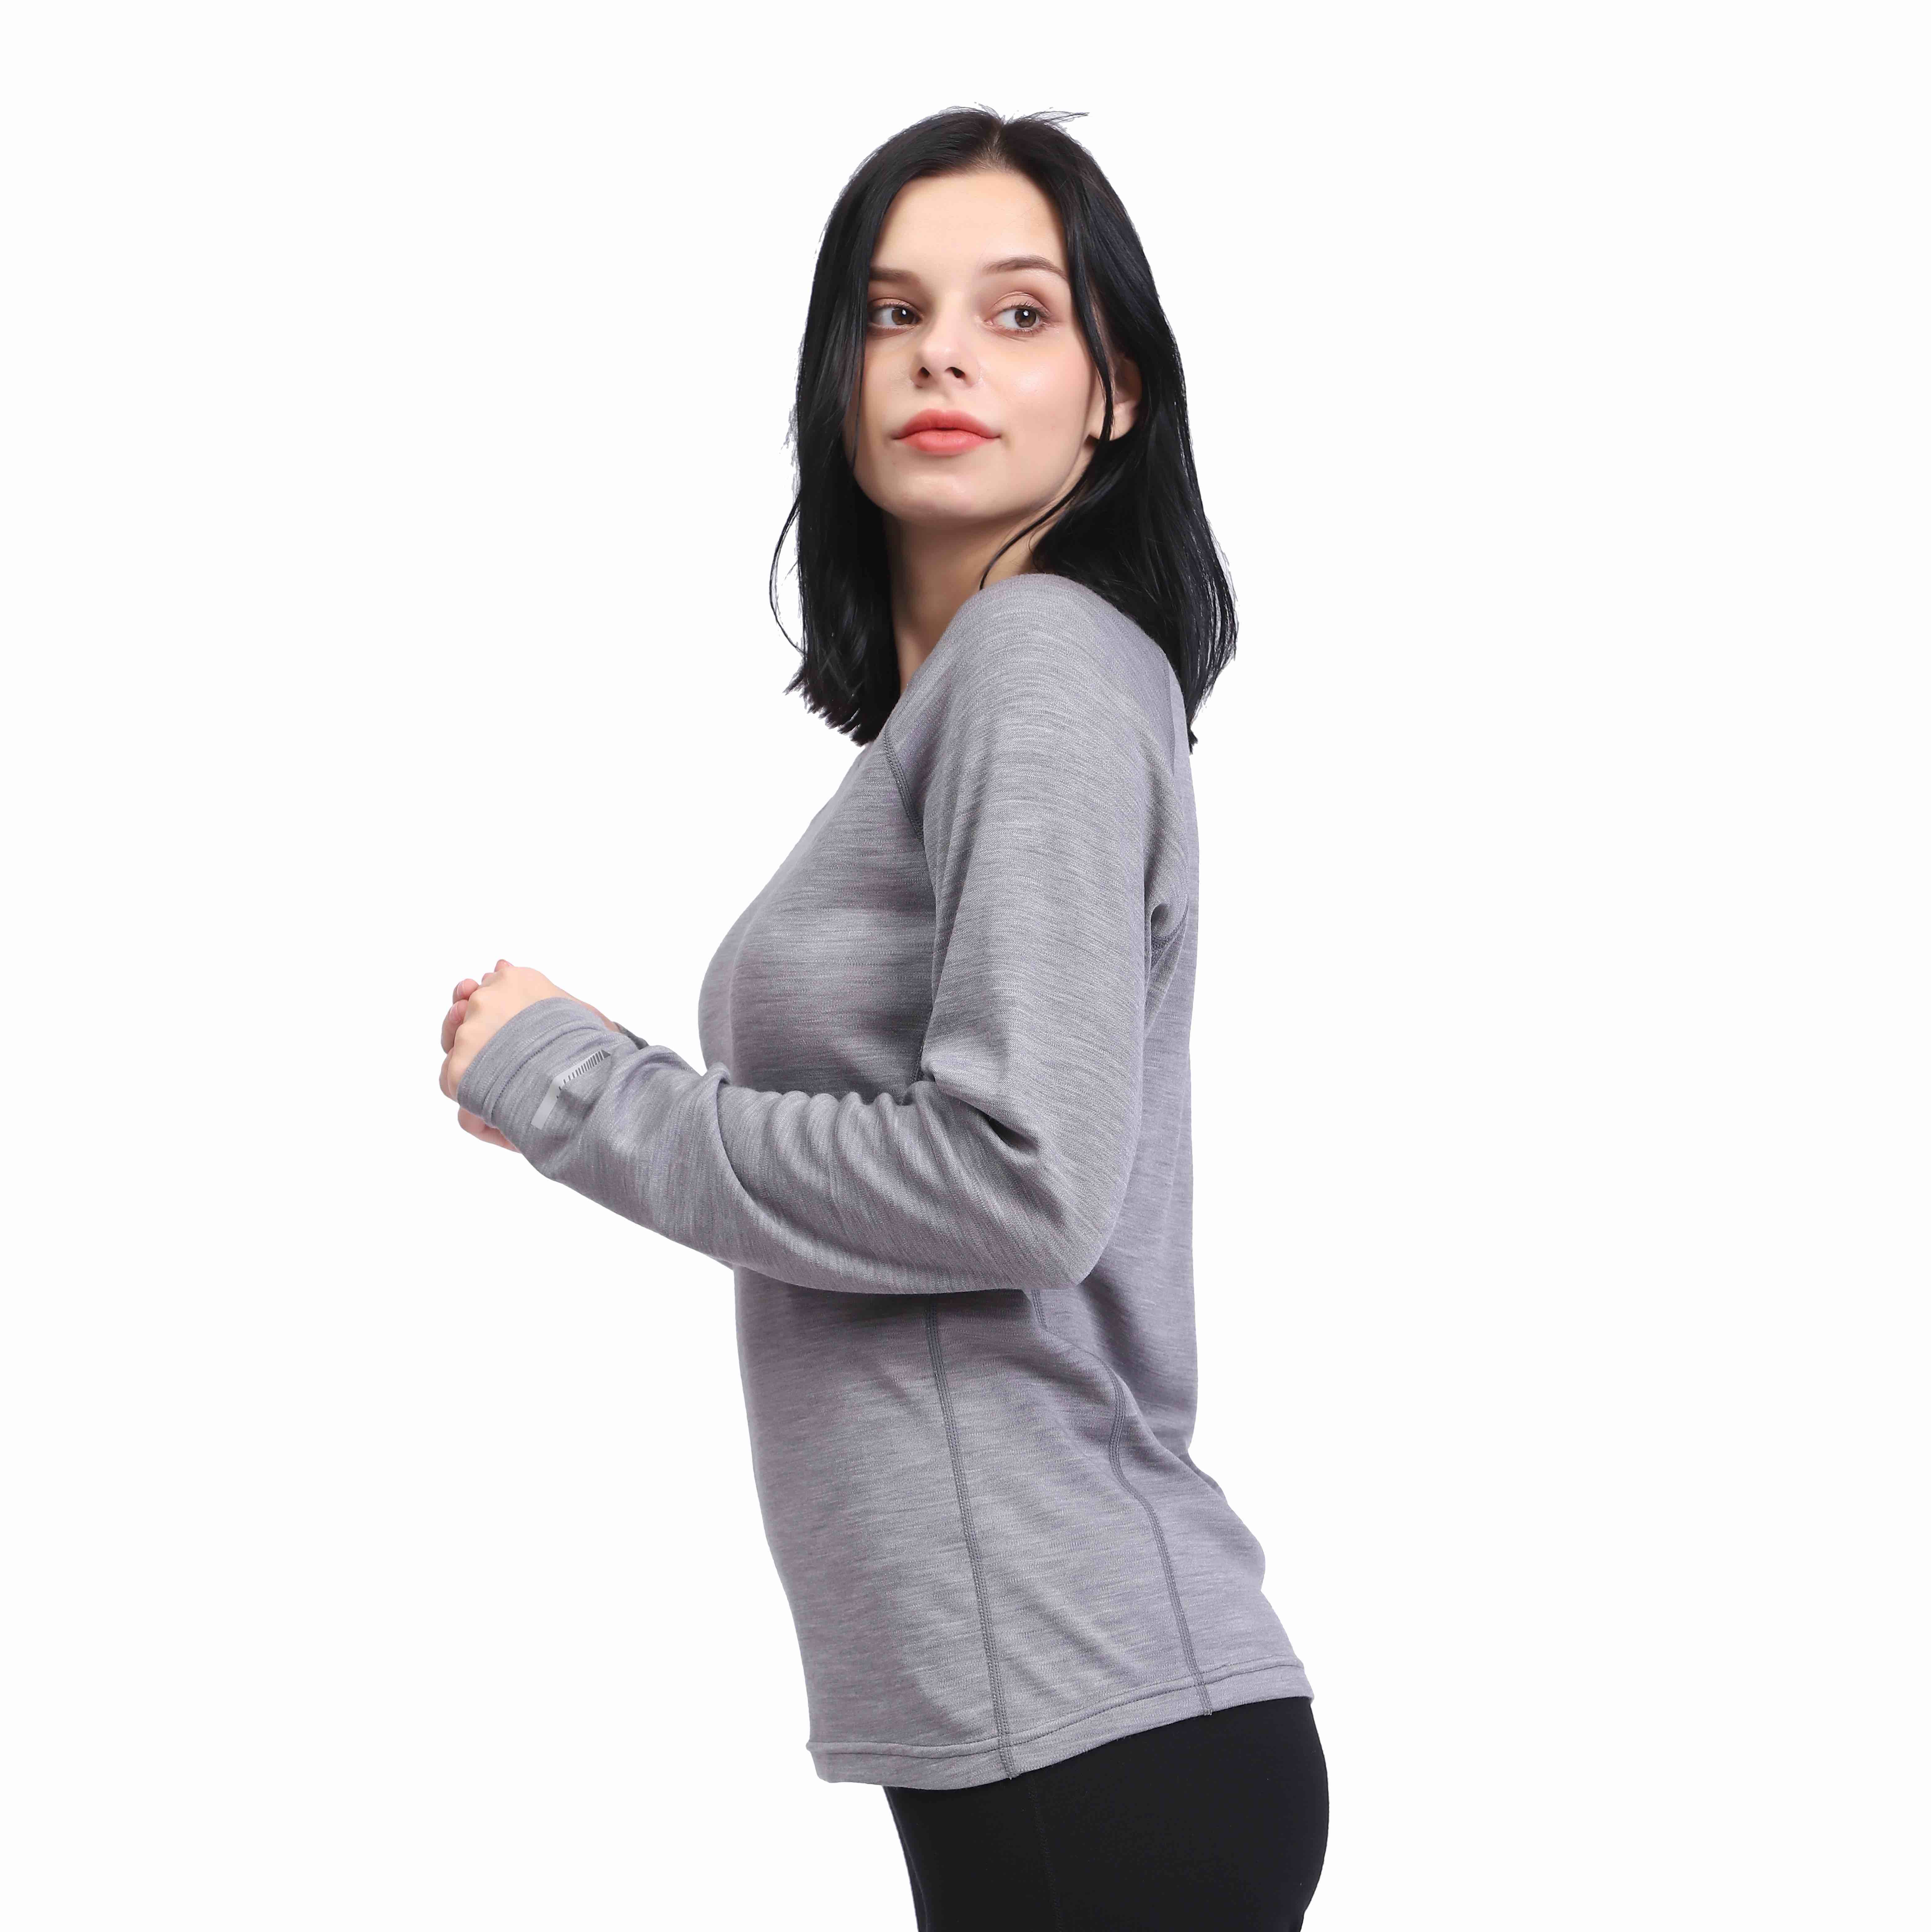 Women's 100% Merino Wool Thermal Underwear Long Sleeve Base Layer Set 